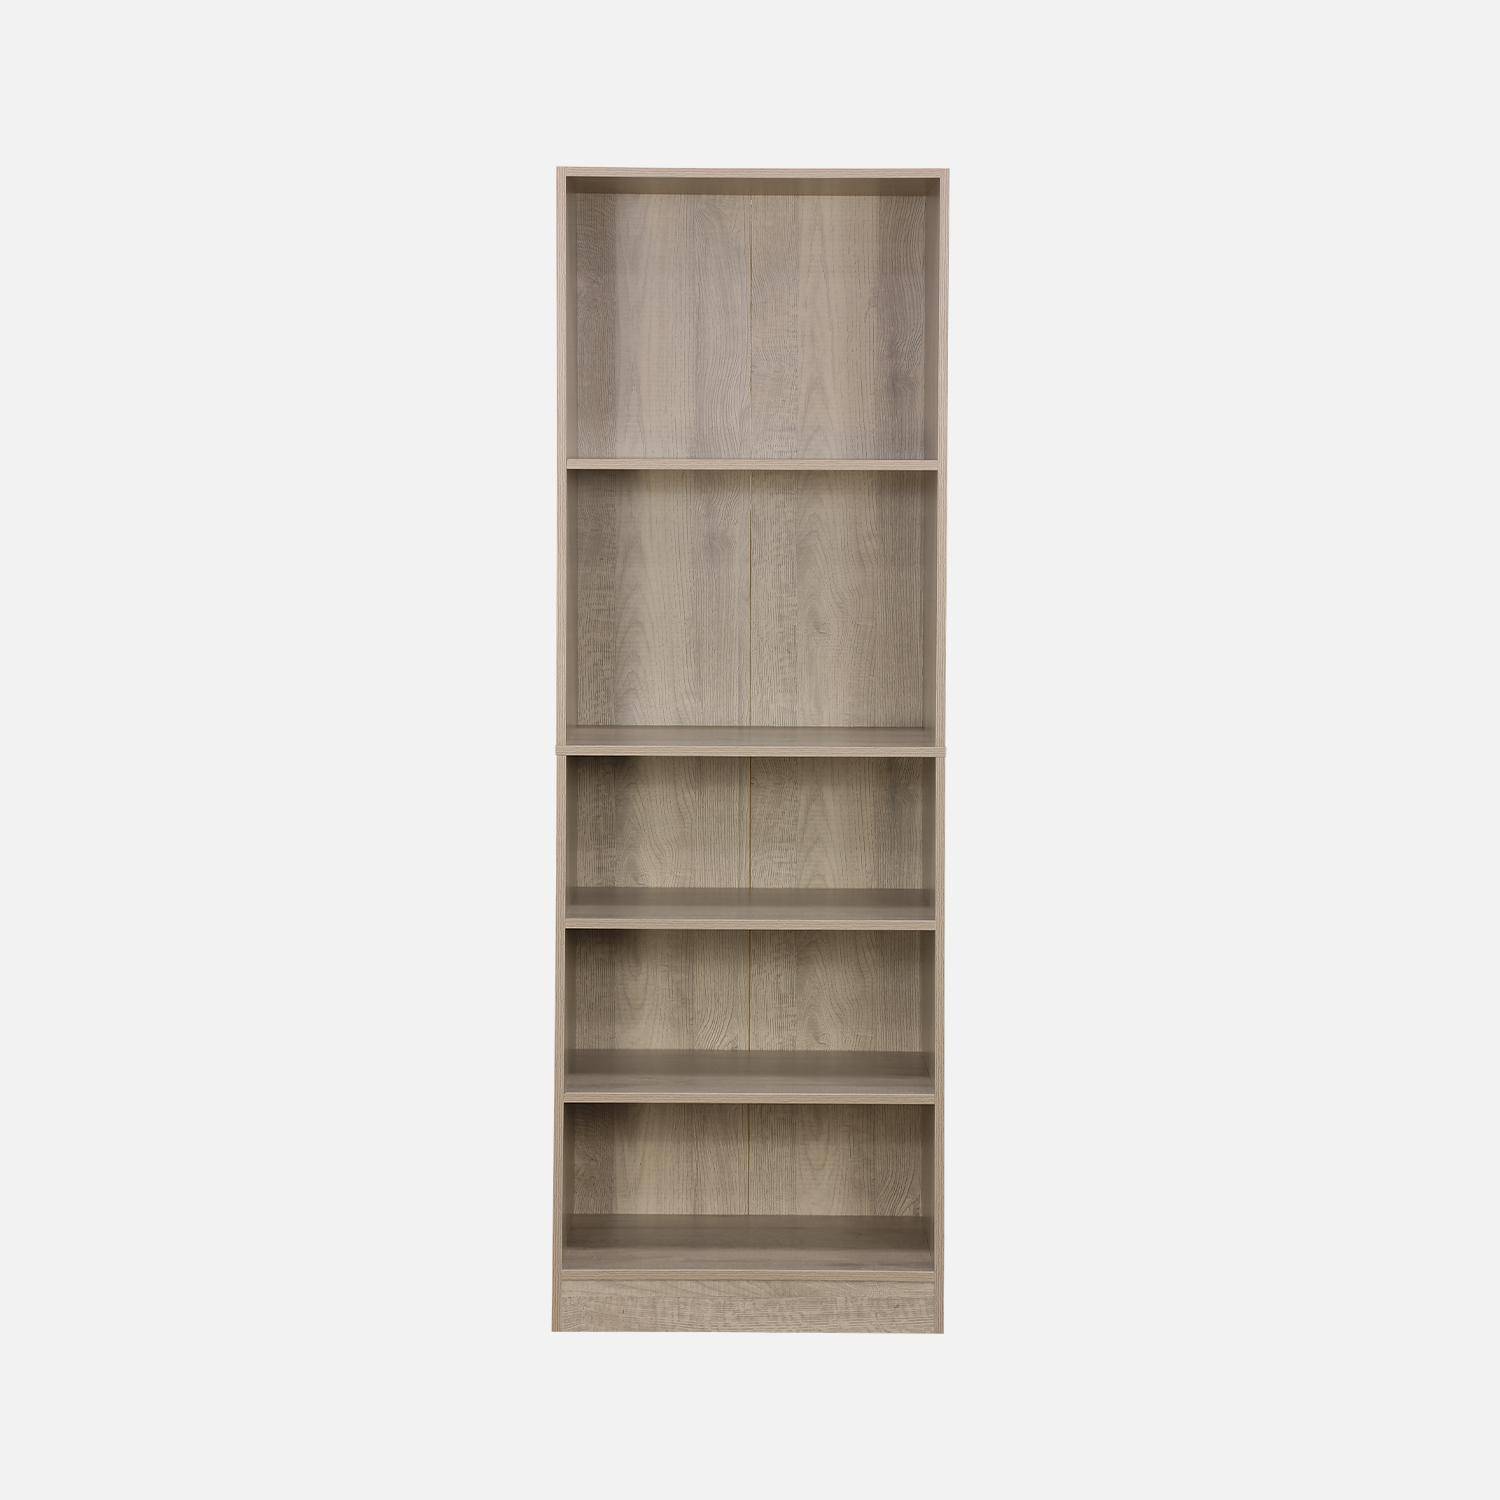 Modular open wardrobe shelf unit, 60x45x180cm, Modulo, 5 shelves, Natural,sweeek,Photo4